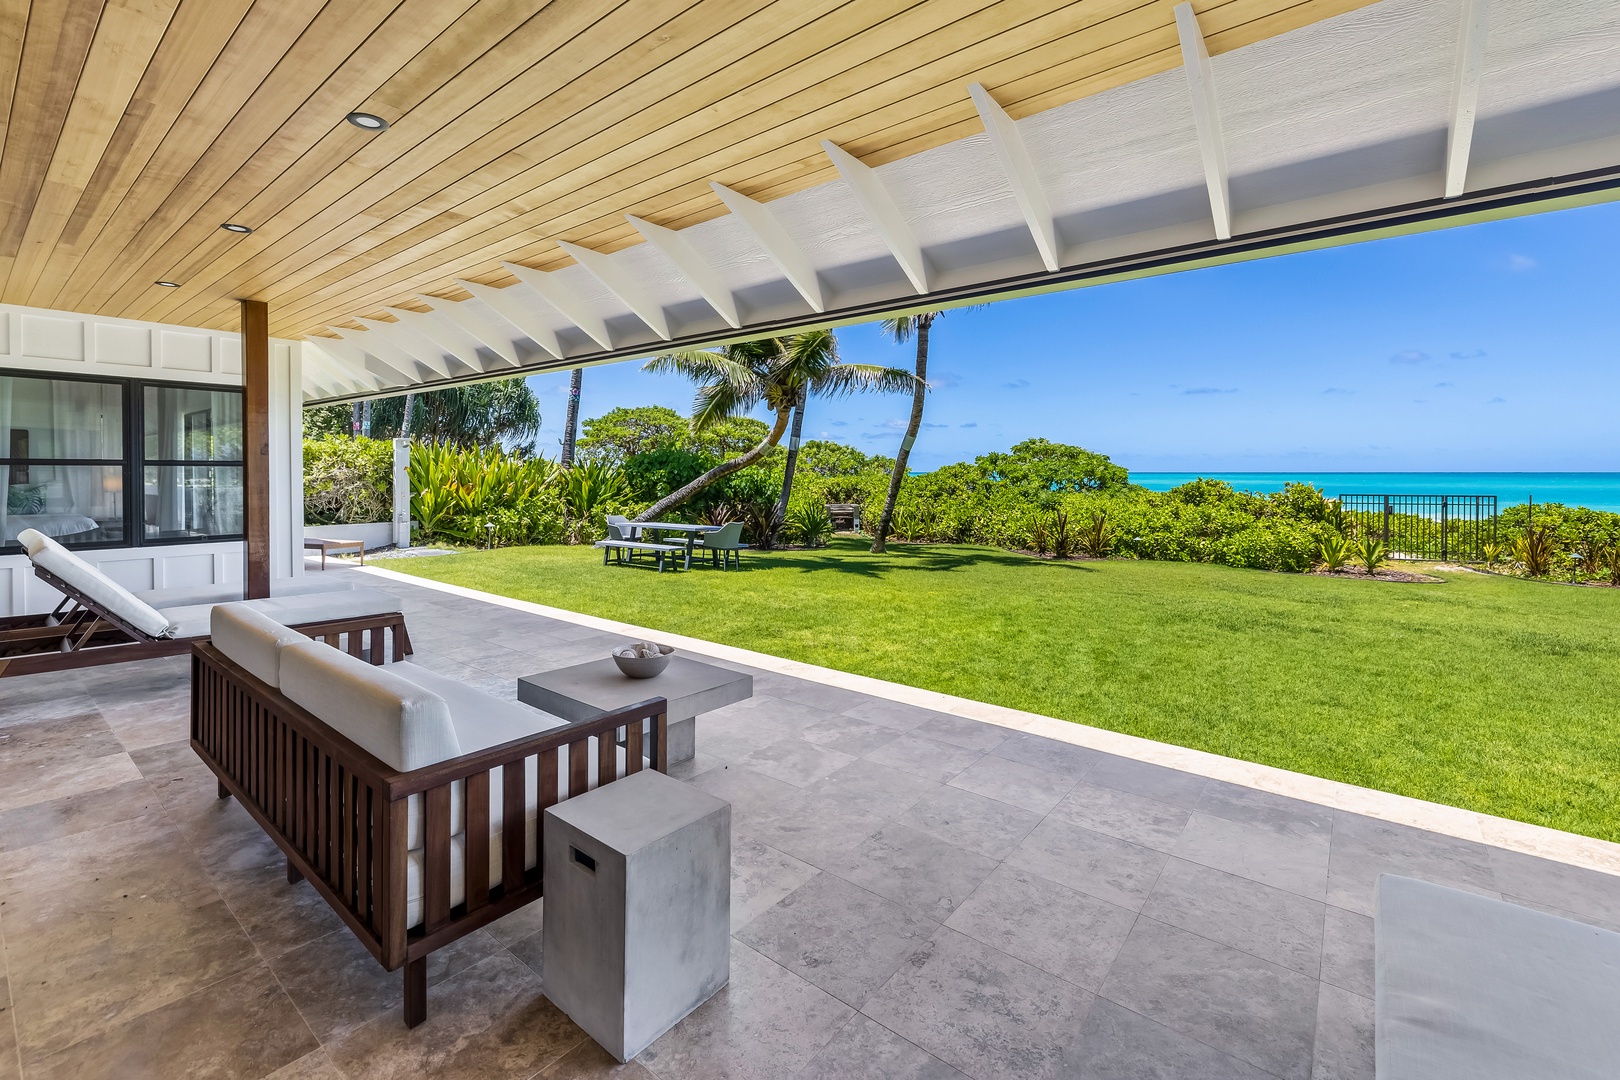 Kailua Vacation Rentals, Kailua Beach Villa - Just through the doors, you'll stumble upon absolutely breathtaking views from the lanai